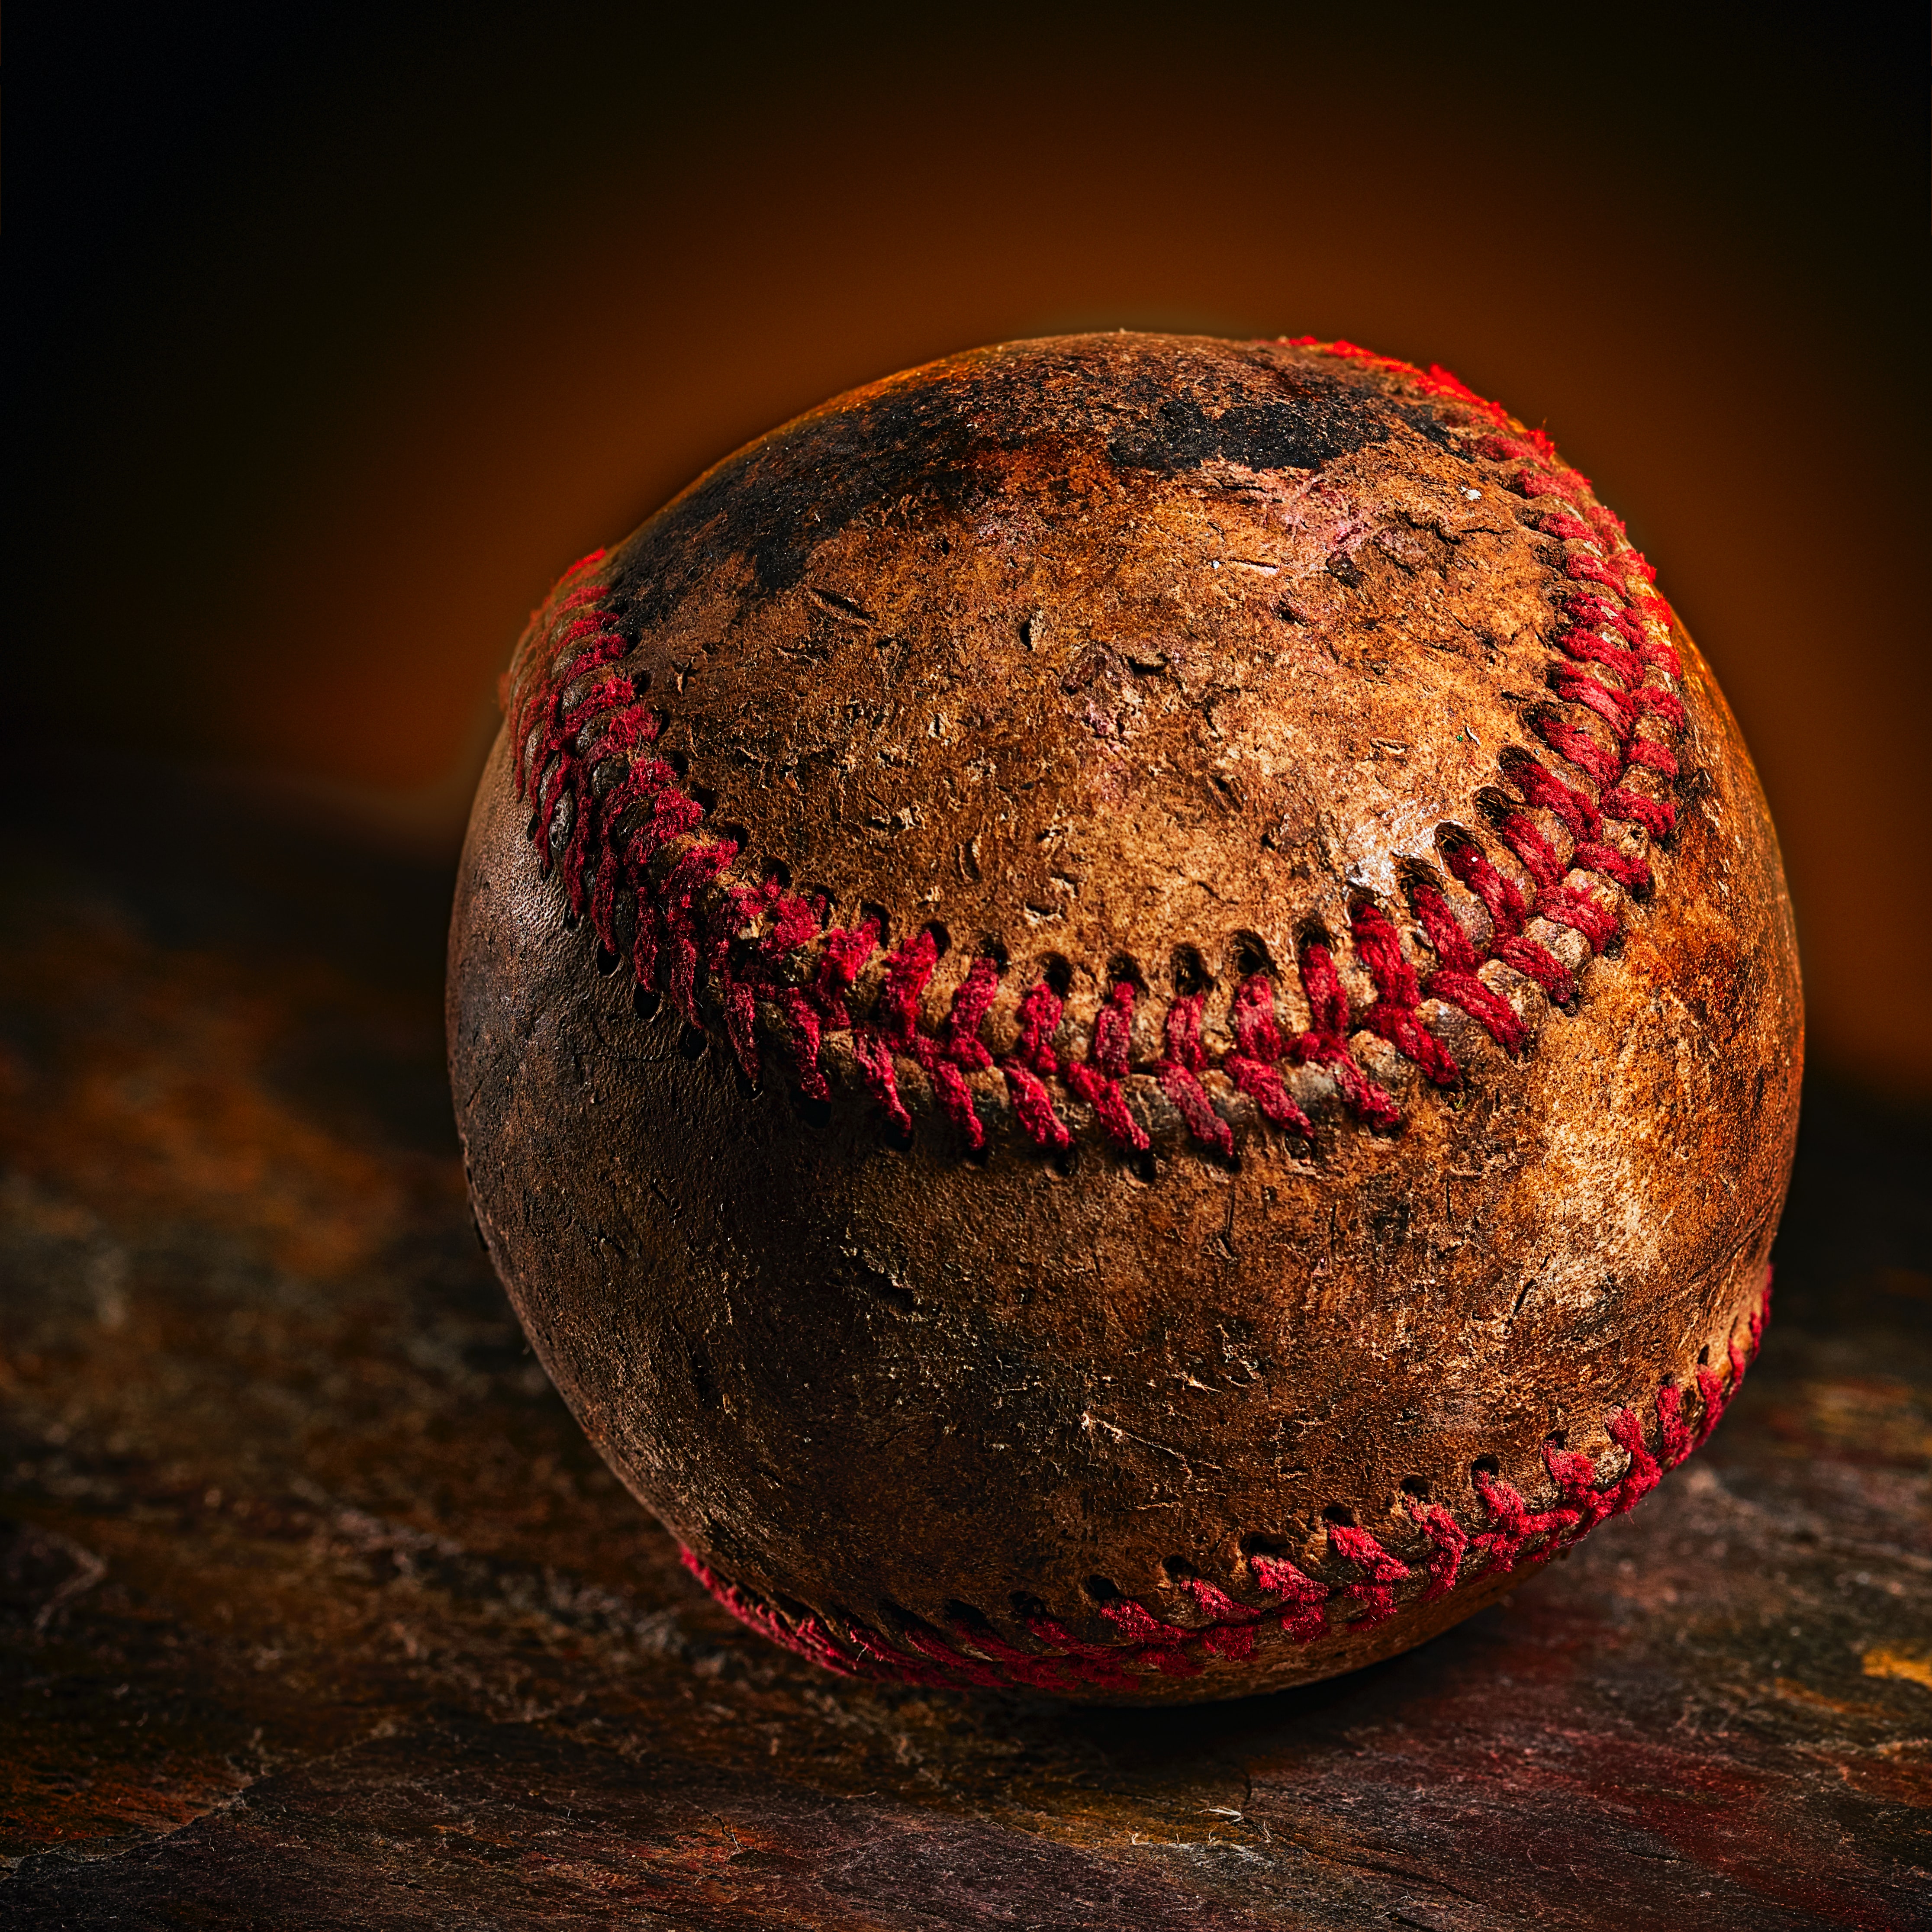 An old, battered baseball.